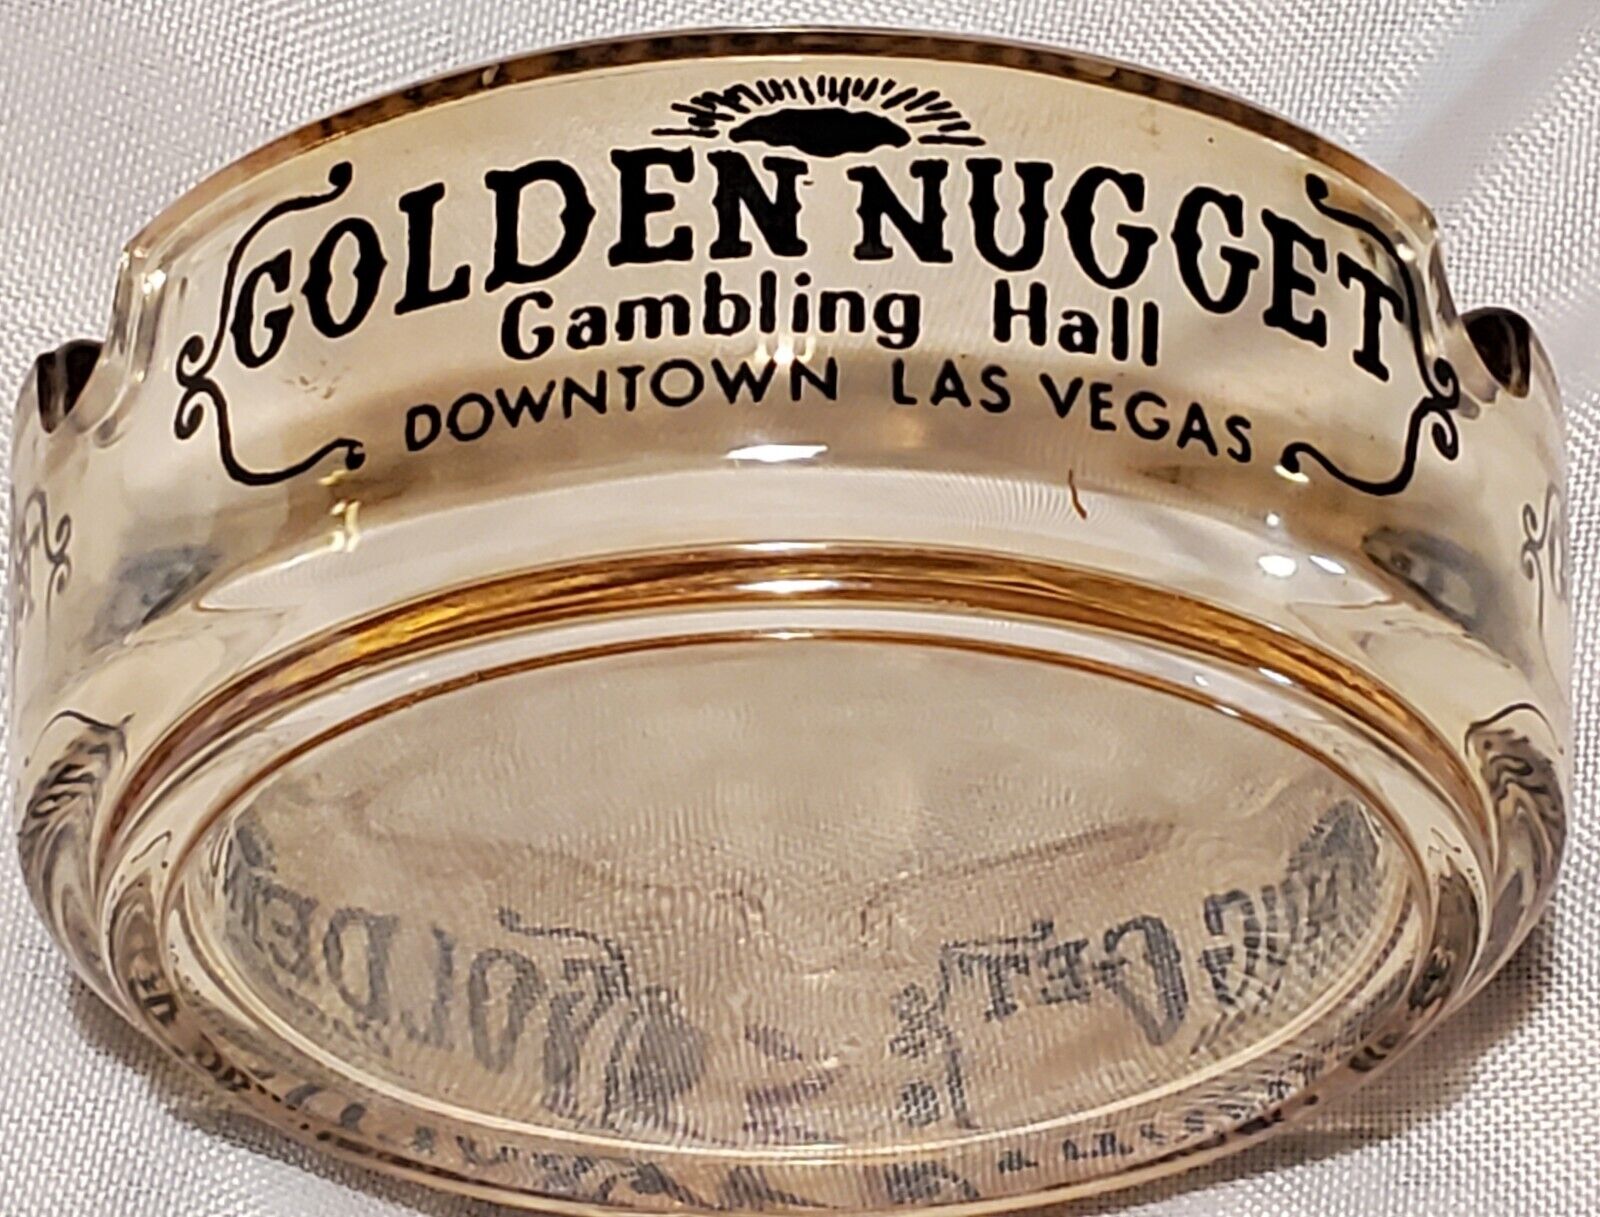 Vintage Golden Nugget Gambling Hall Casino Glass Ashtray Las Vegas Nevada